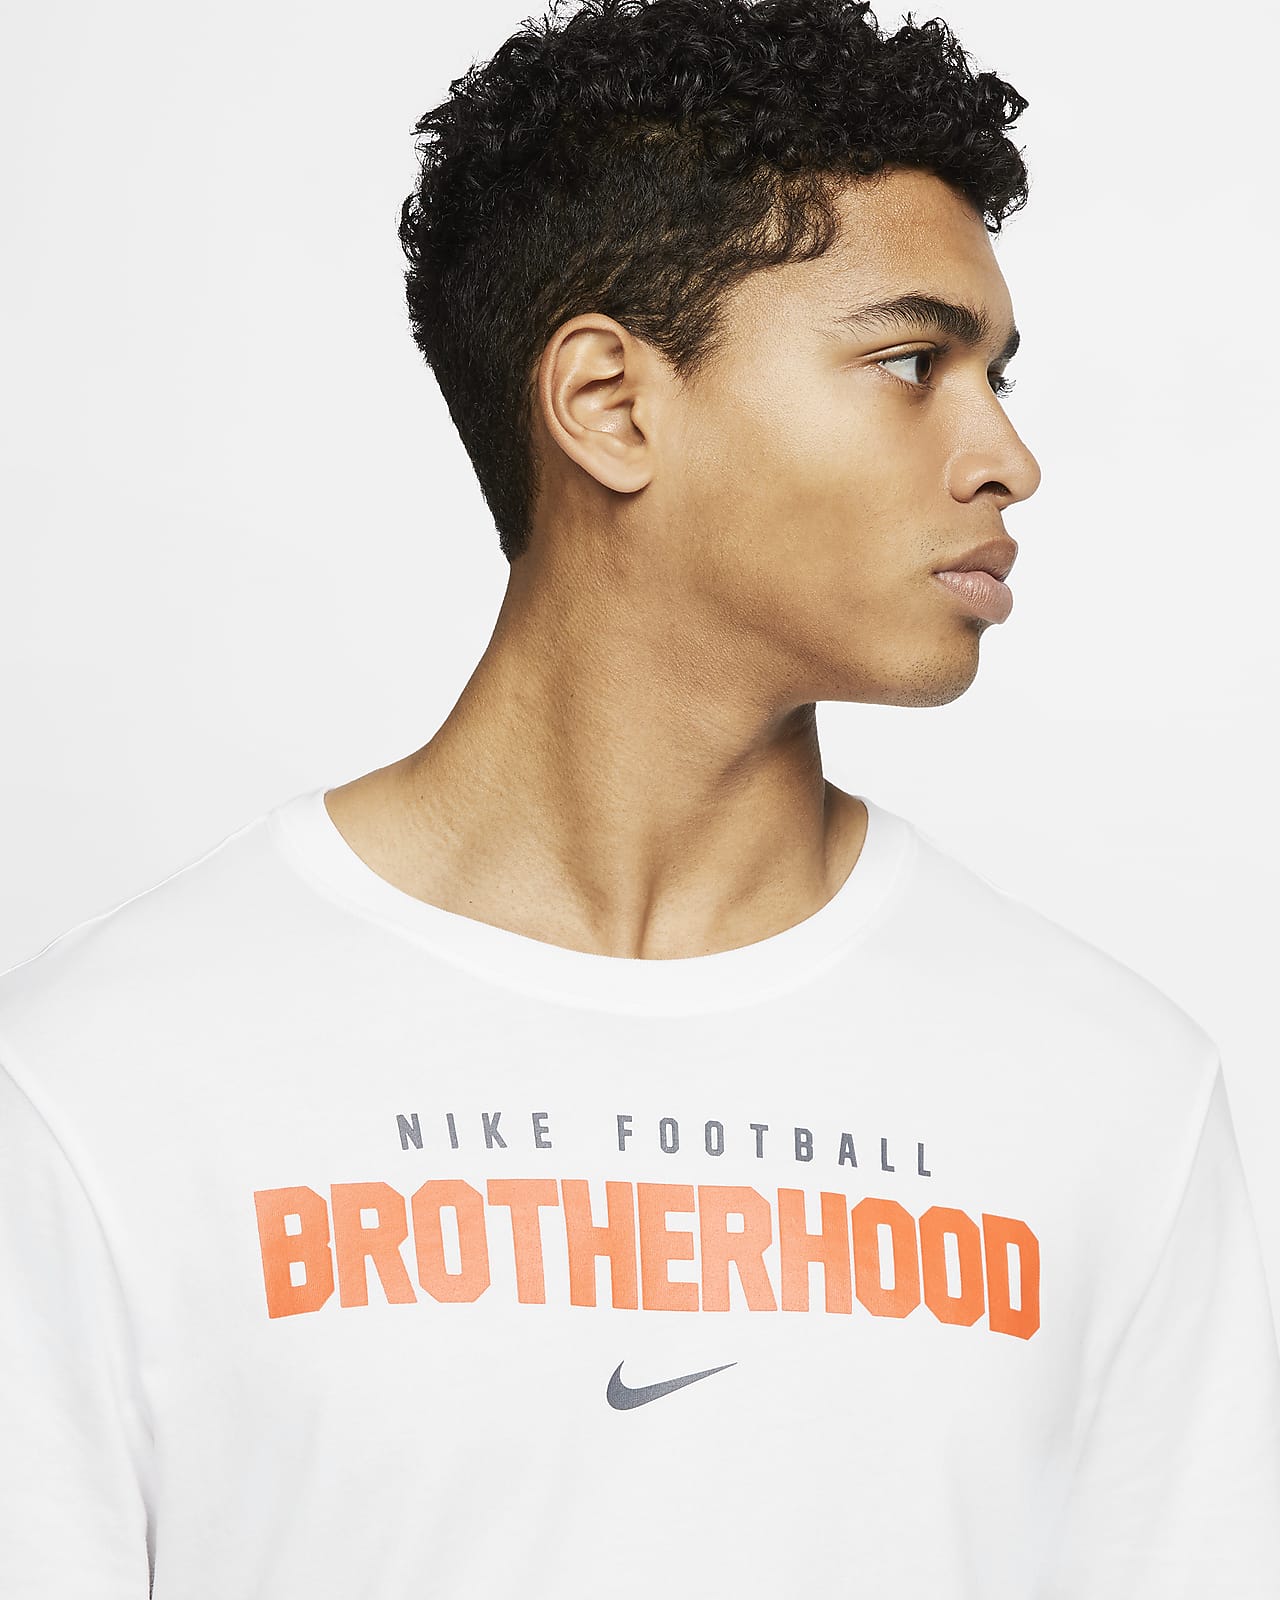 nike football brotherhood shirt